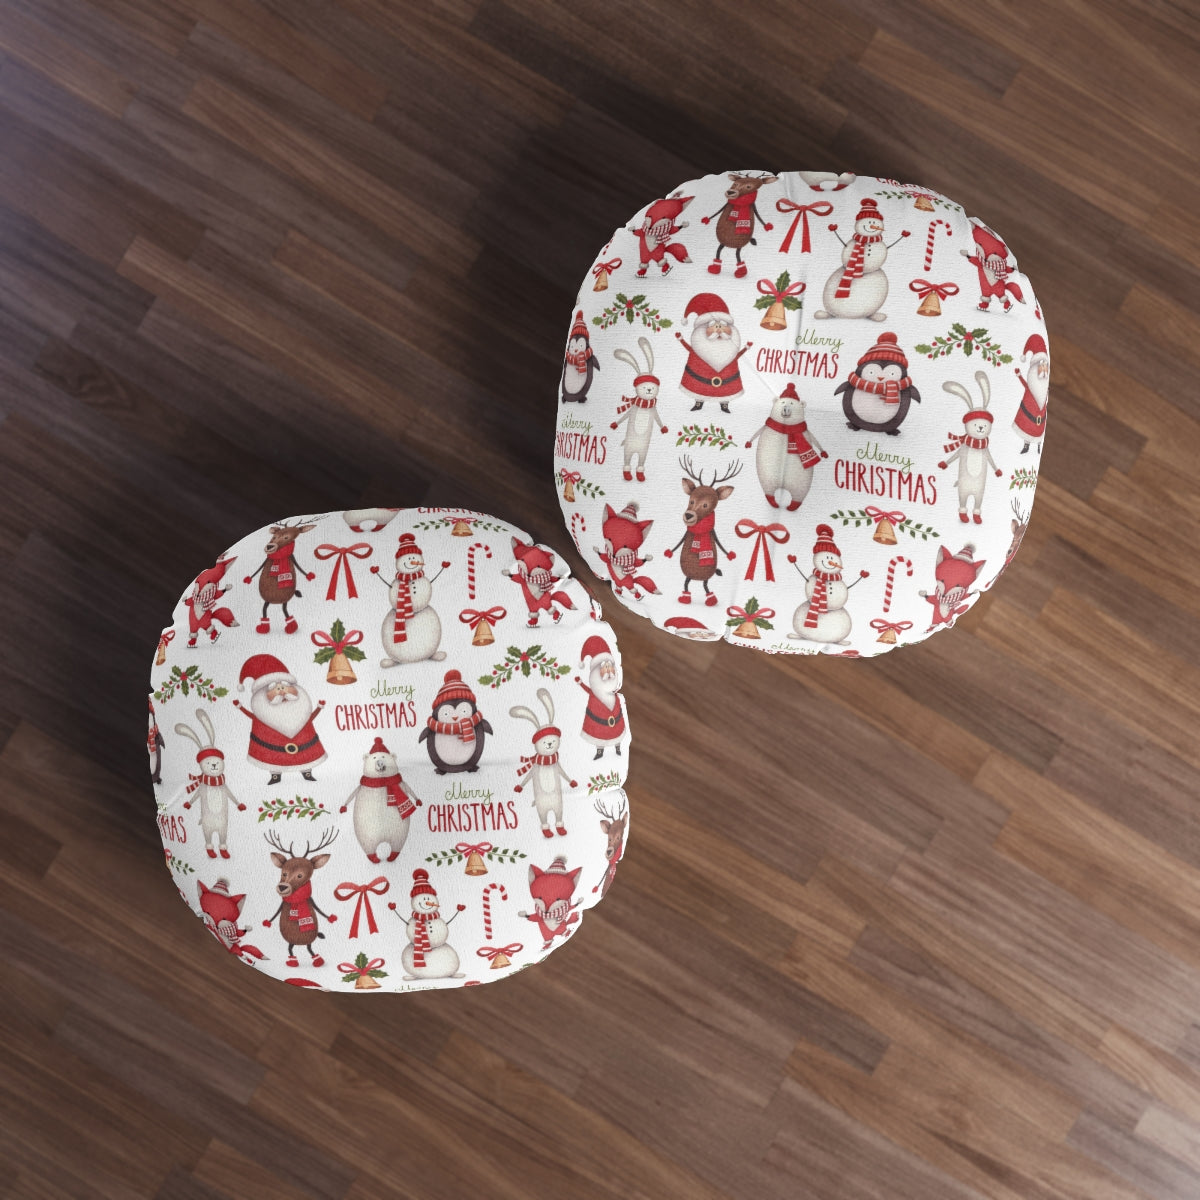 Christmas Santa Tufted Floor Pillow, Round